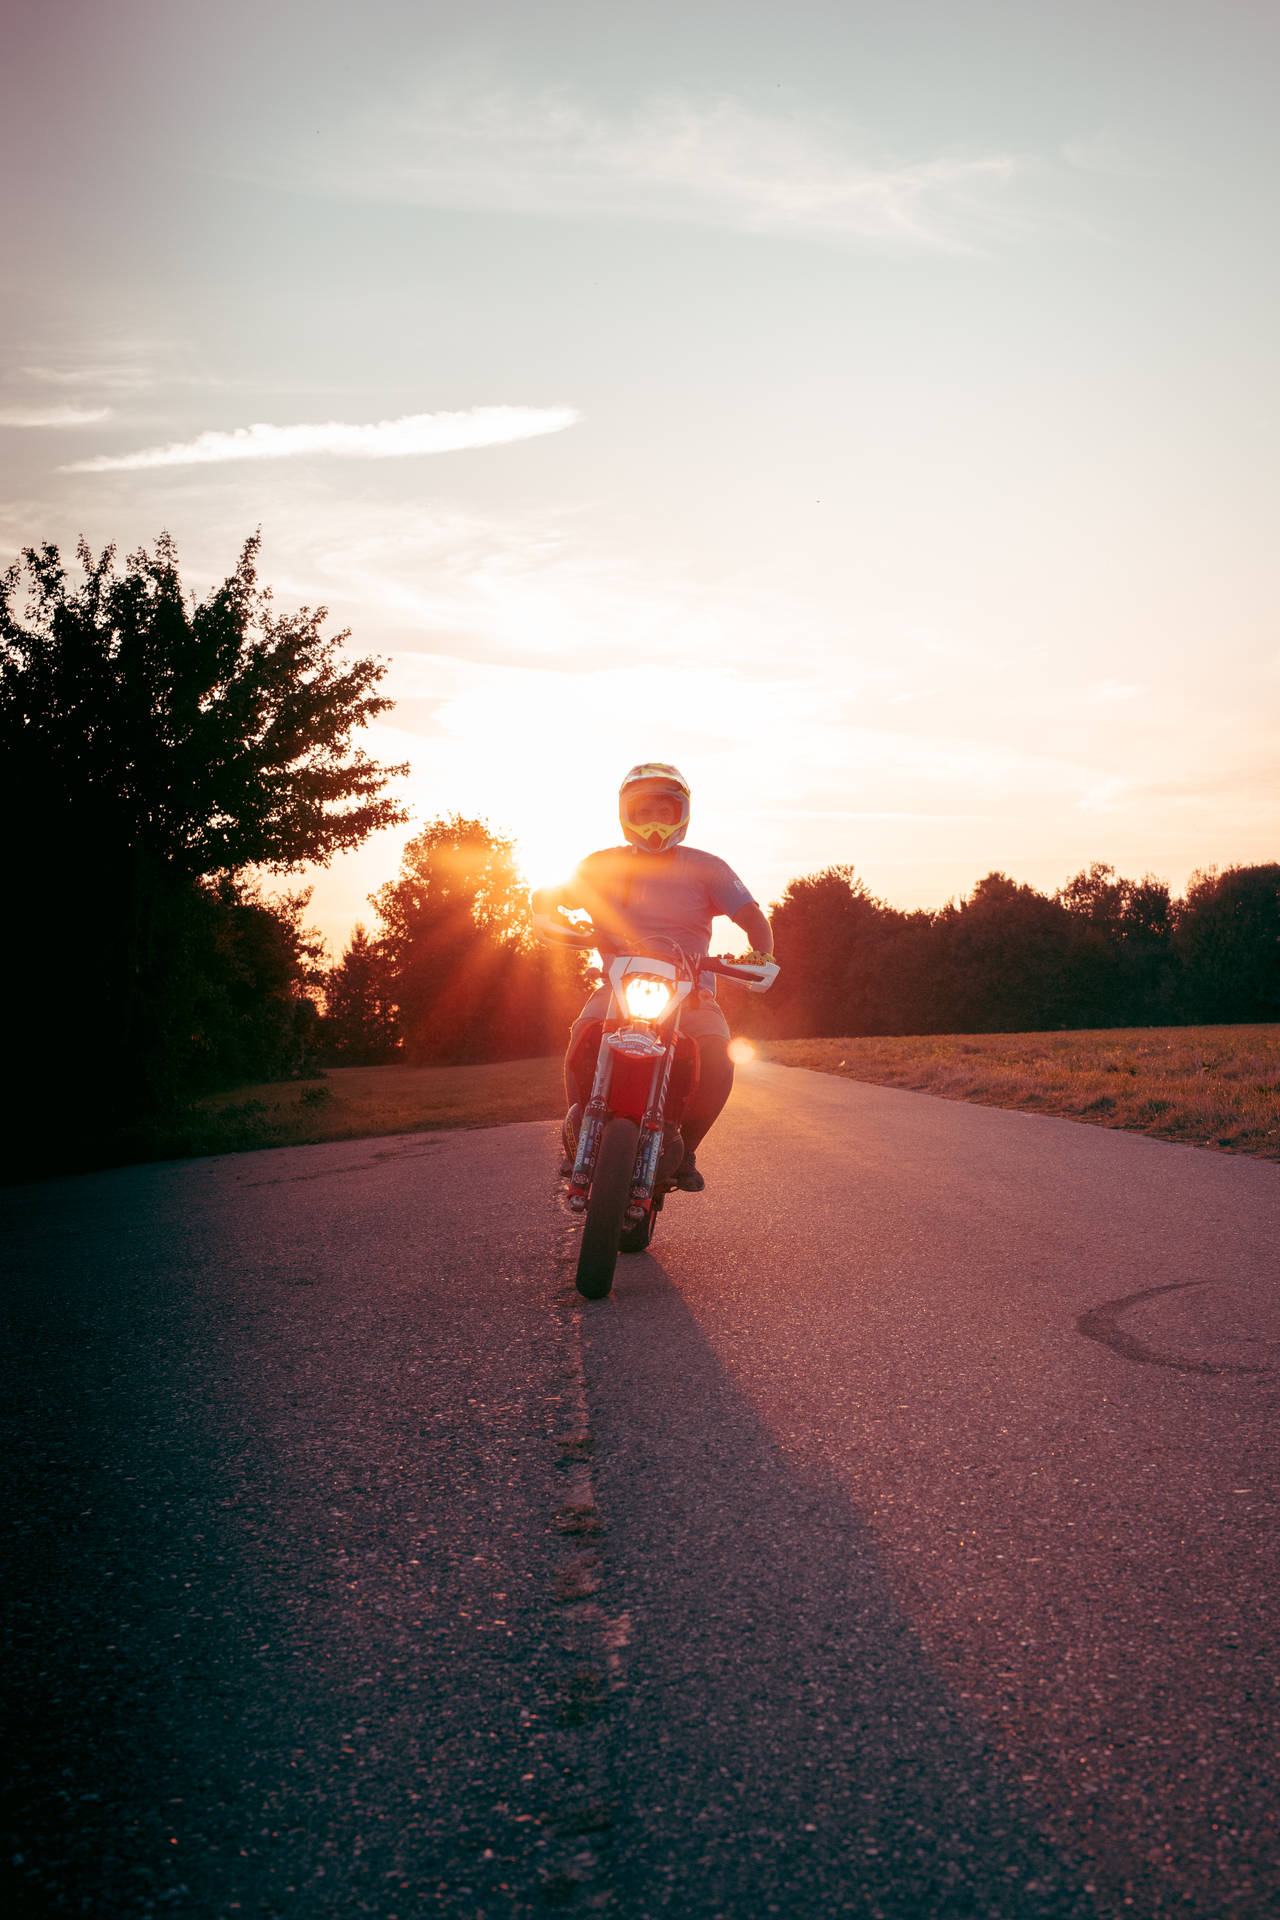 Ktm Bike Rider At Sunset Wallpaper